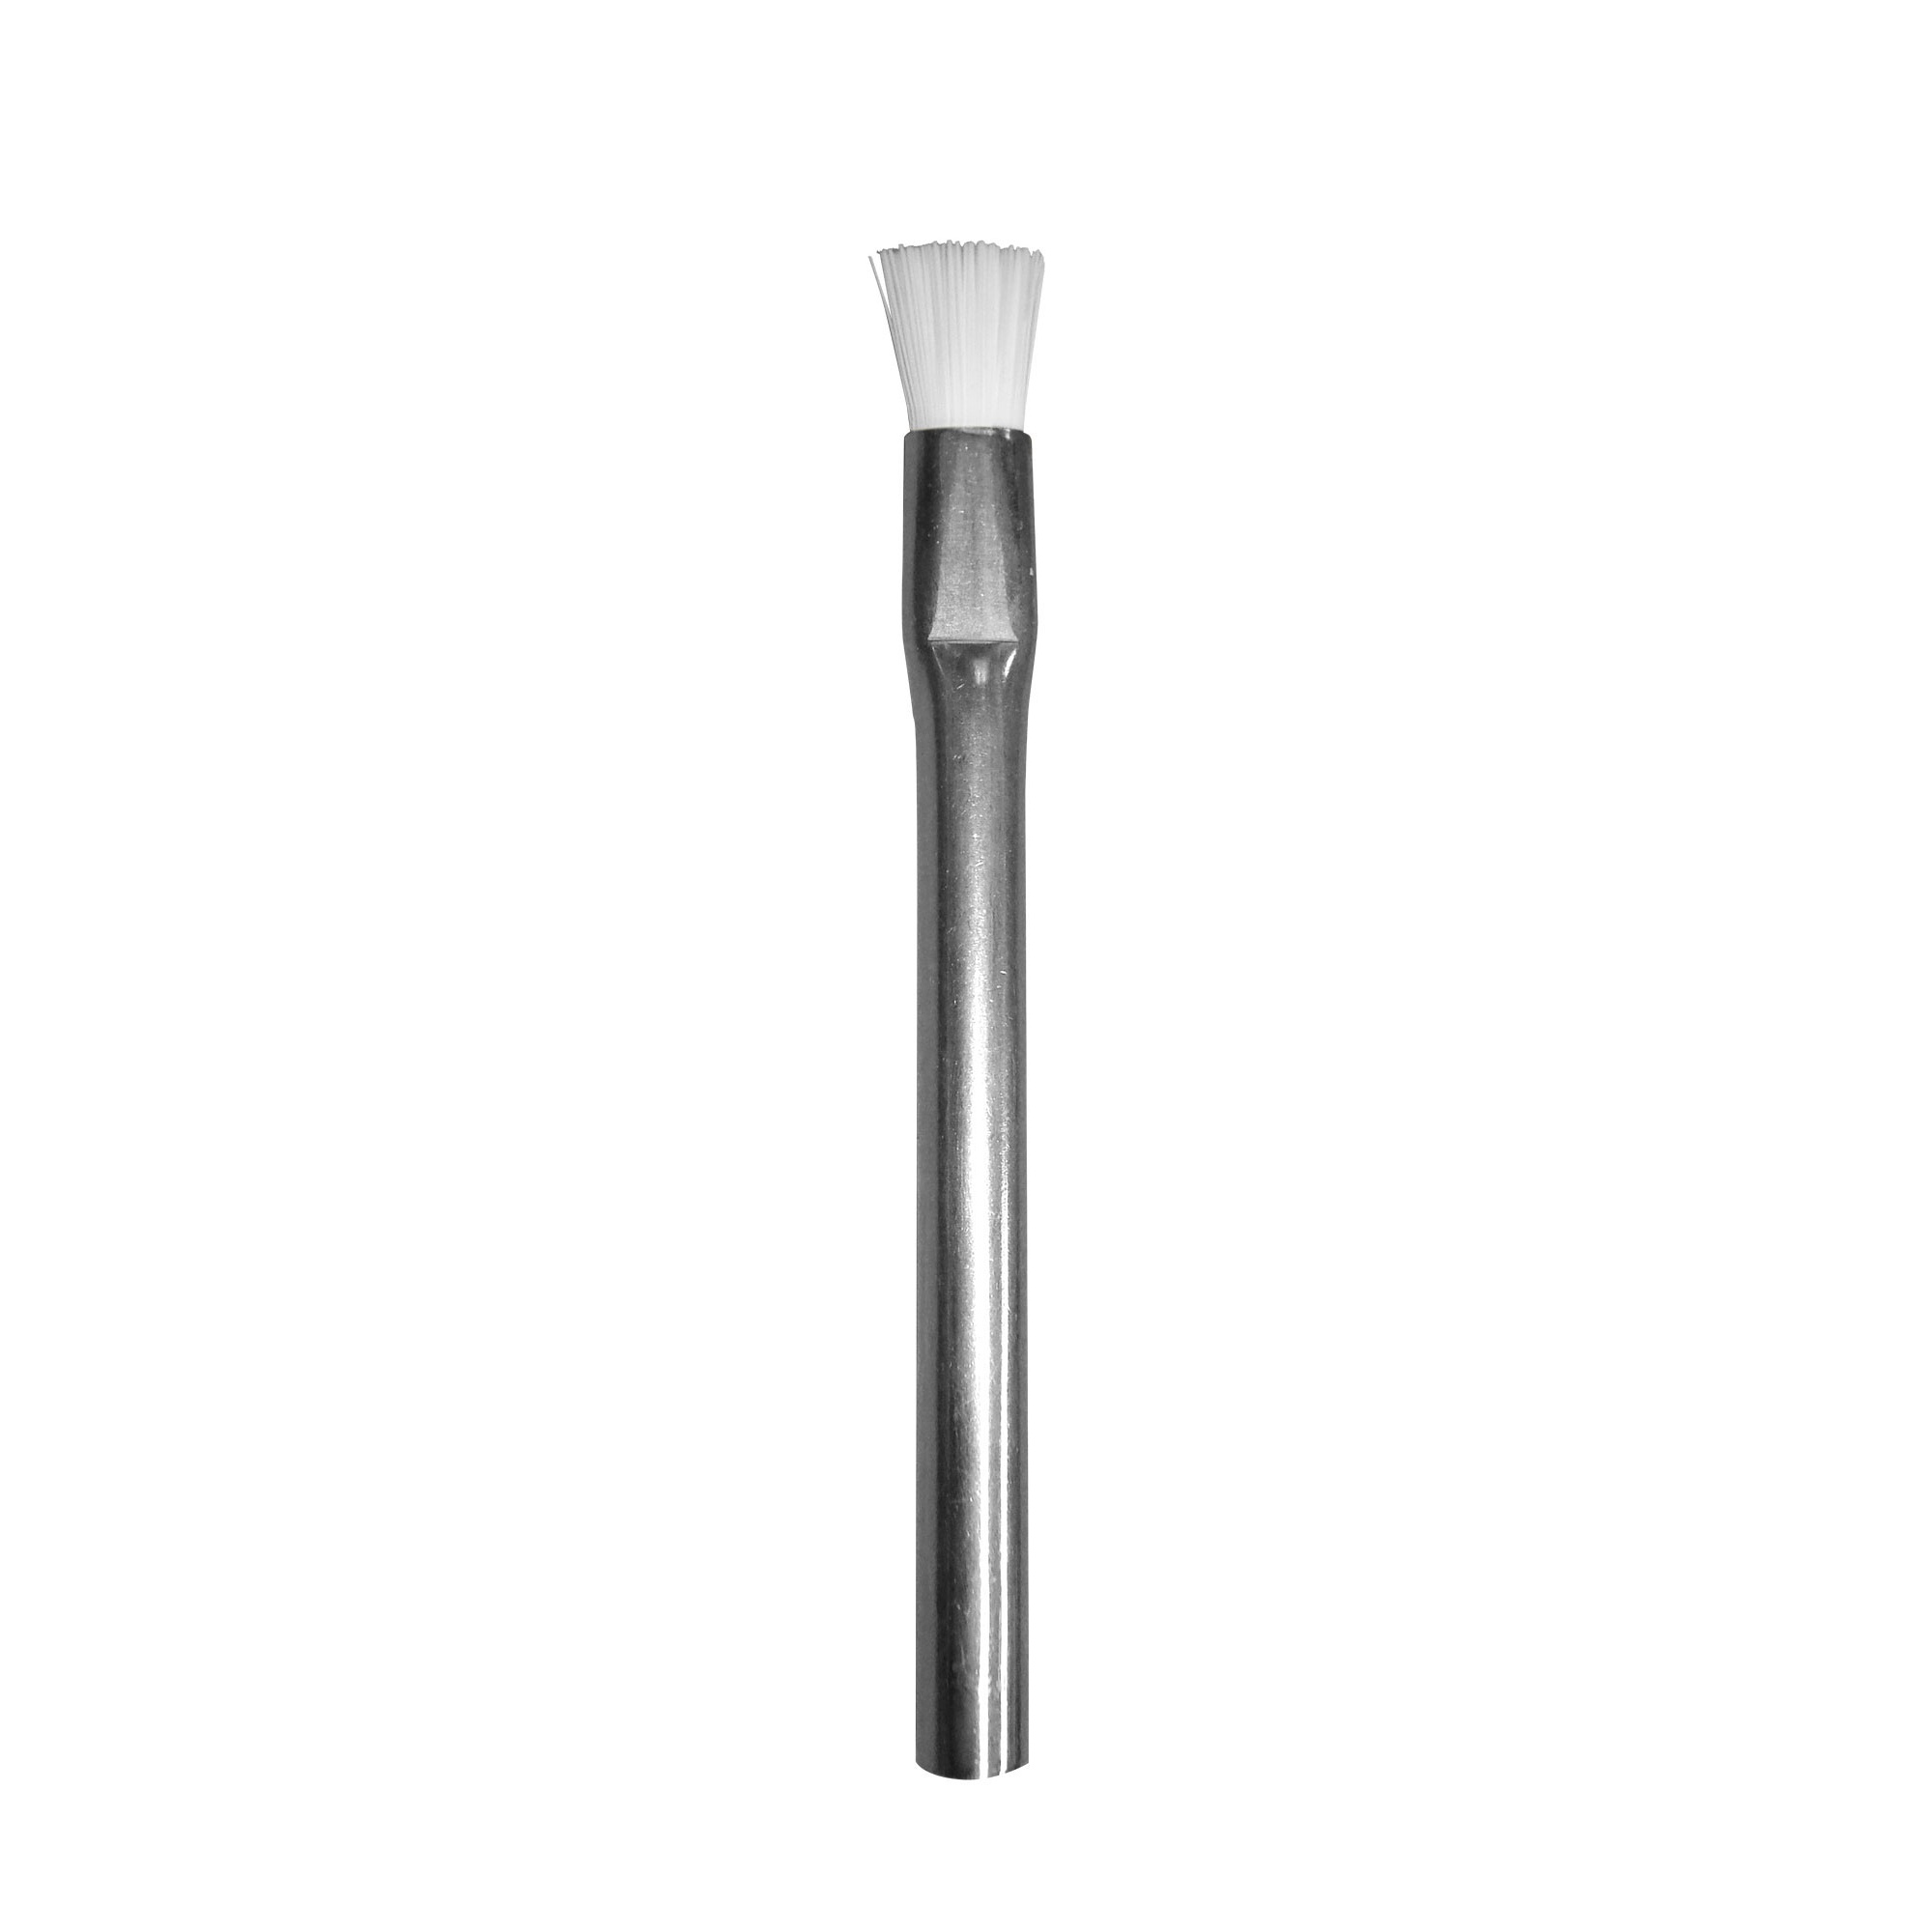 Applicator Brush — 0.008" Polypropylene Bristle / 5/16" Diameter Stainless Steel Tube Handle